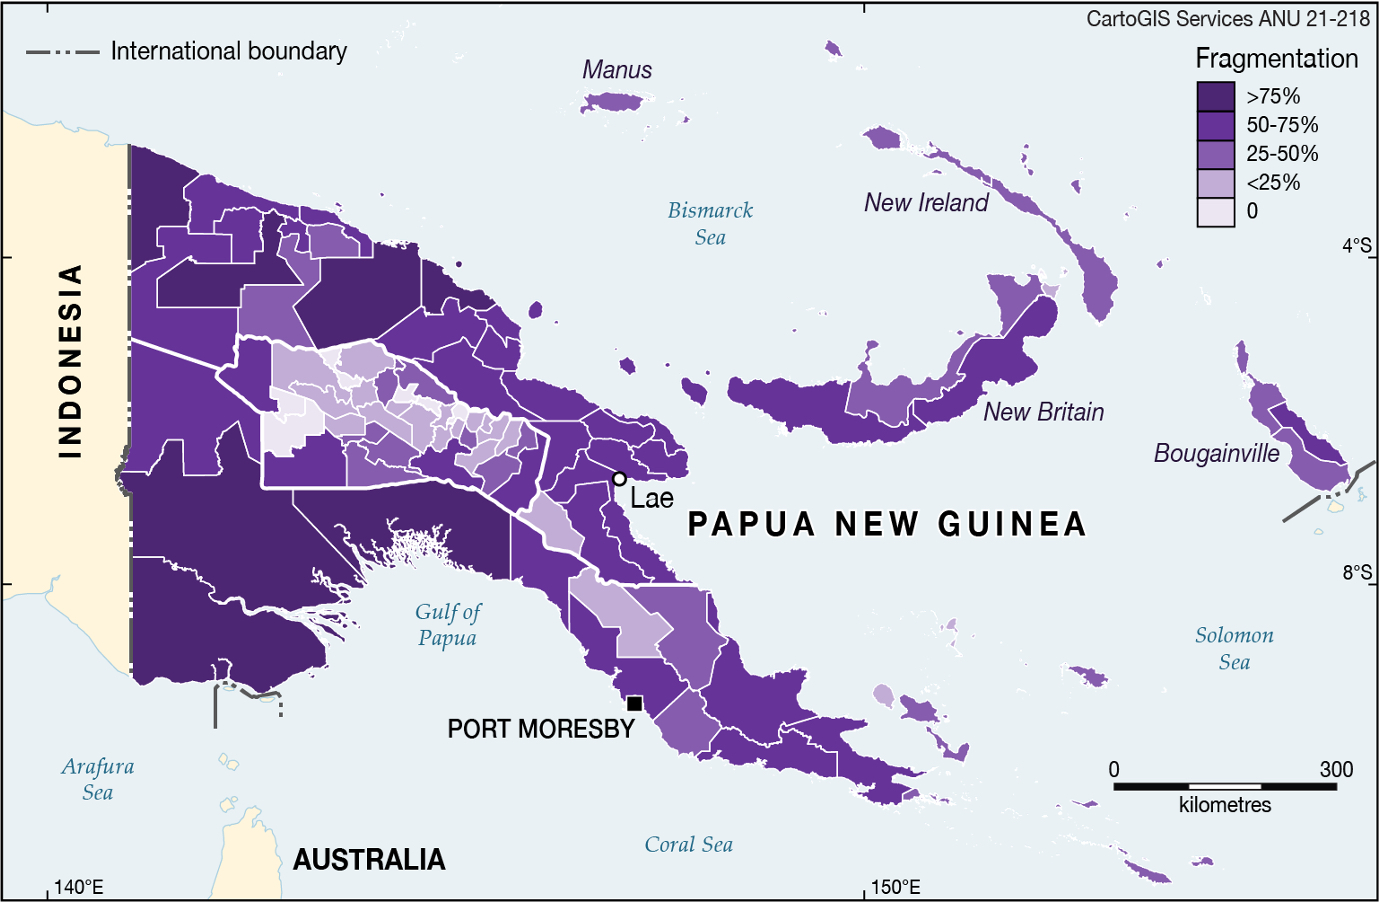 Linguistic fragmentation across PNG